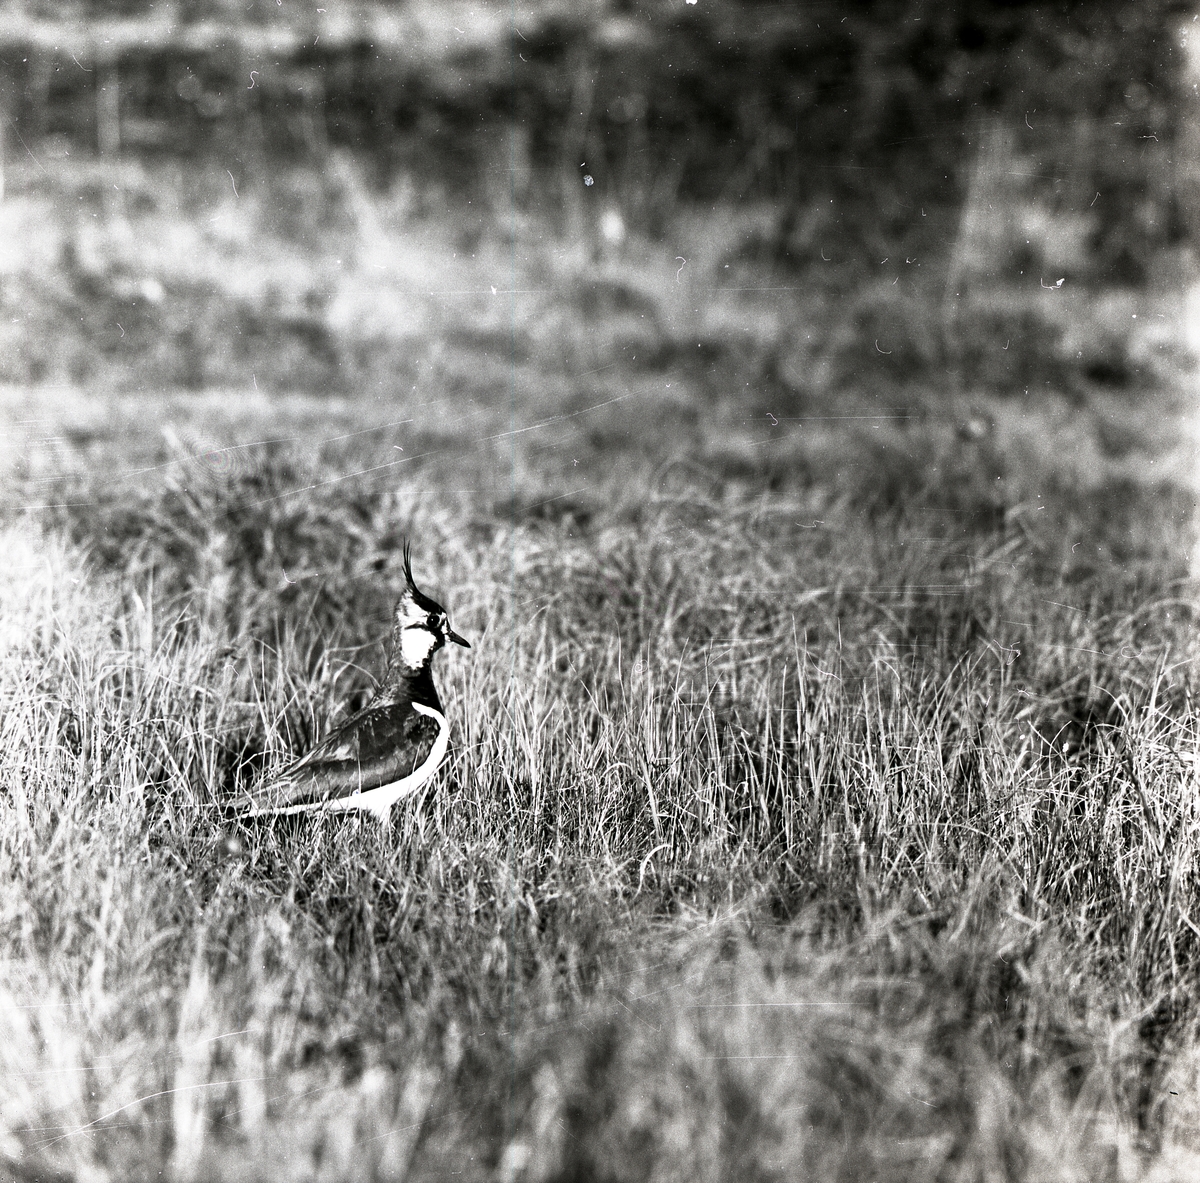 En tofsvipa står i gräs, 26 maj 1957.